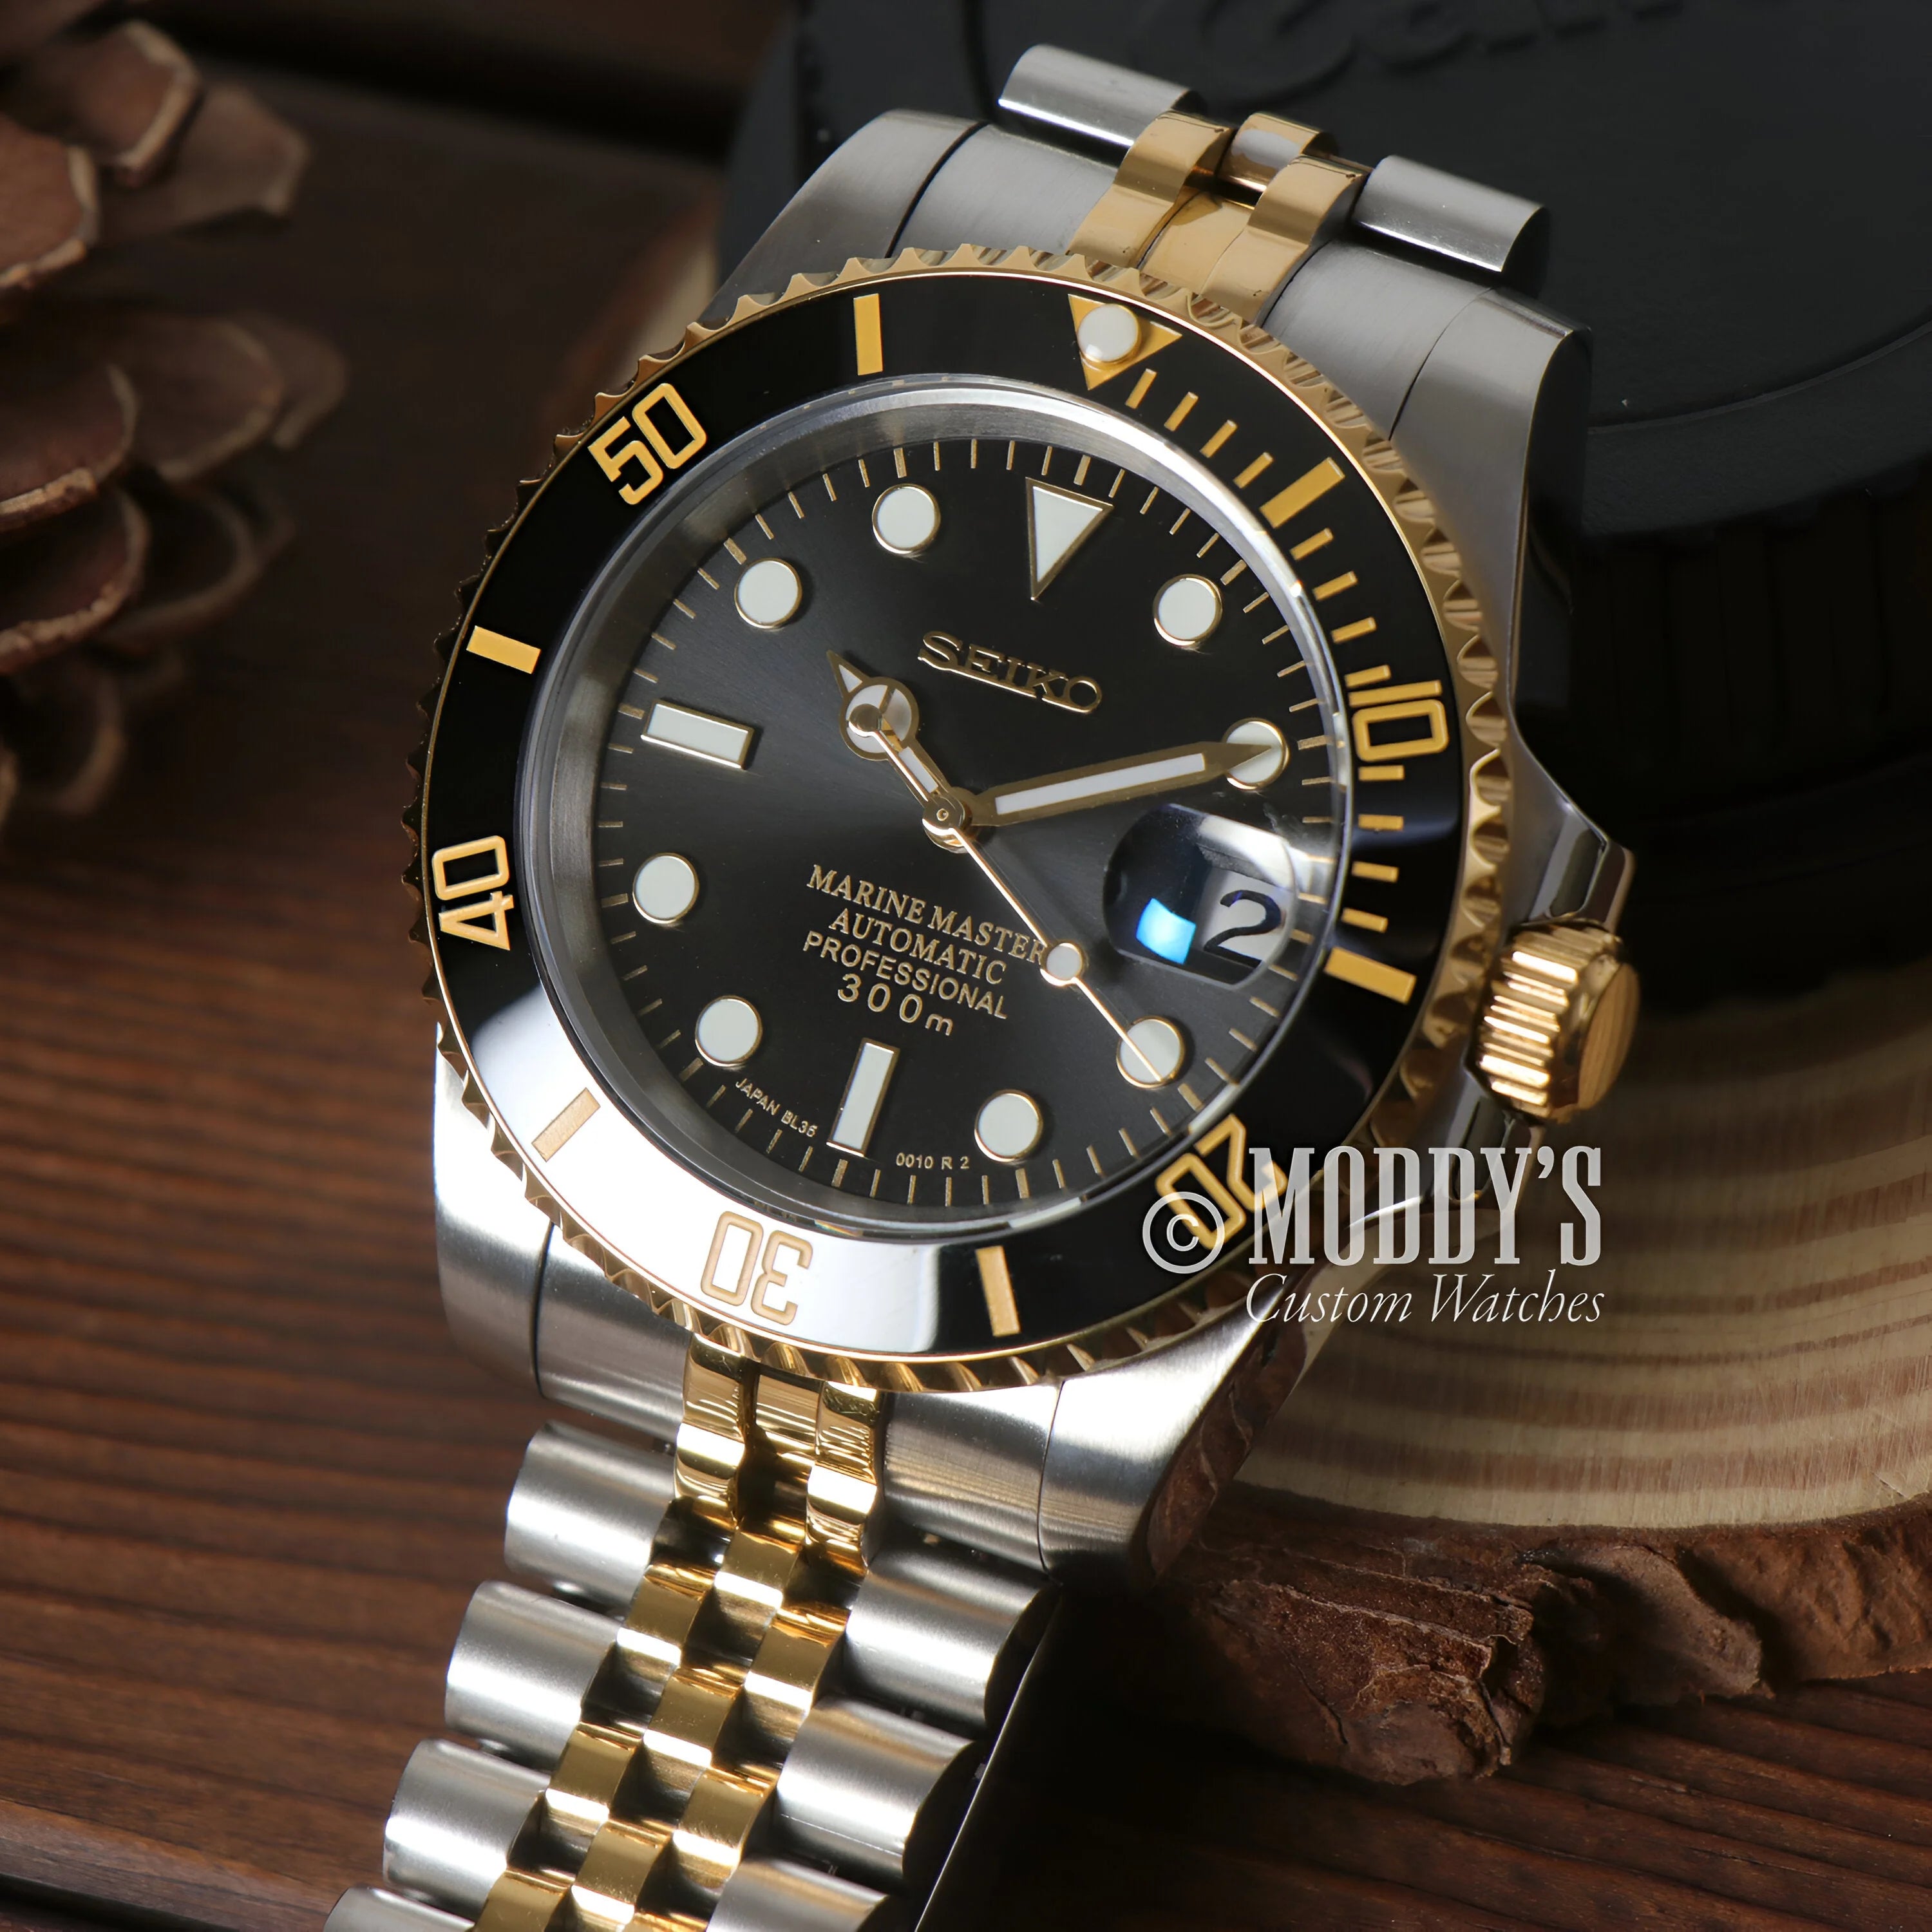 Seiko Marine Master Automatic Dive Watch, Seikomariner Black, Two-tone Gold And Silver Bracelet